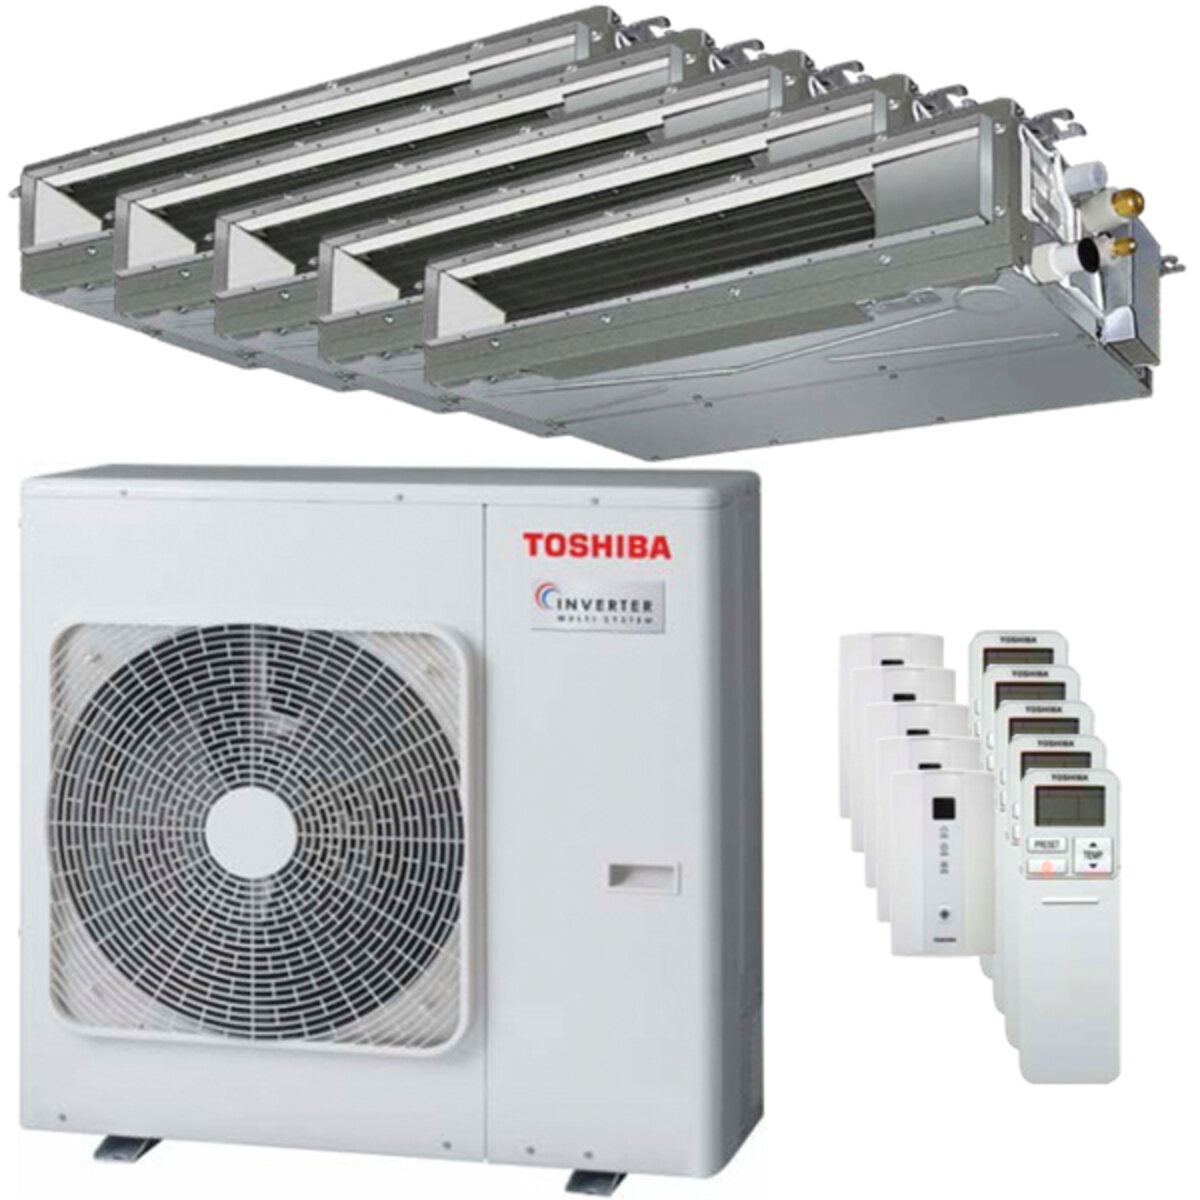 Toshiba Ductable Air Conditioner U2 penta split 7000 + 7000 + 7000 + 9000 + 9000 BTU inverter A ++ outdoor unit 10.0 kW